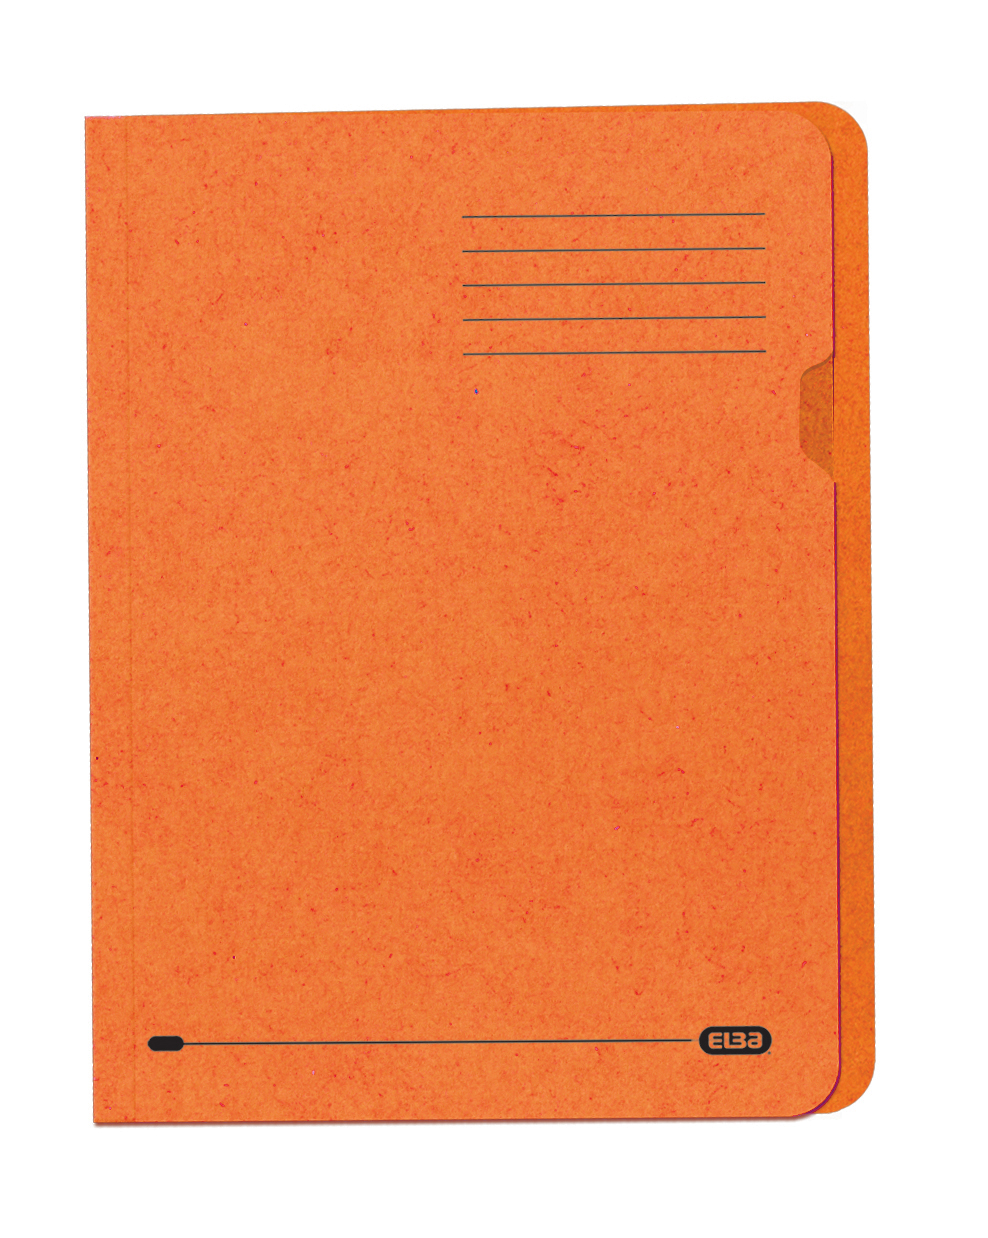 Elba A4 Square Cut Folder Recycled Lightweight 180gsm Manilla Orange